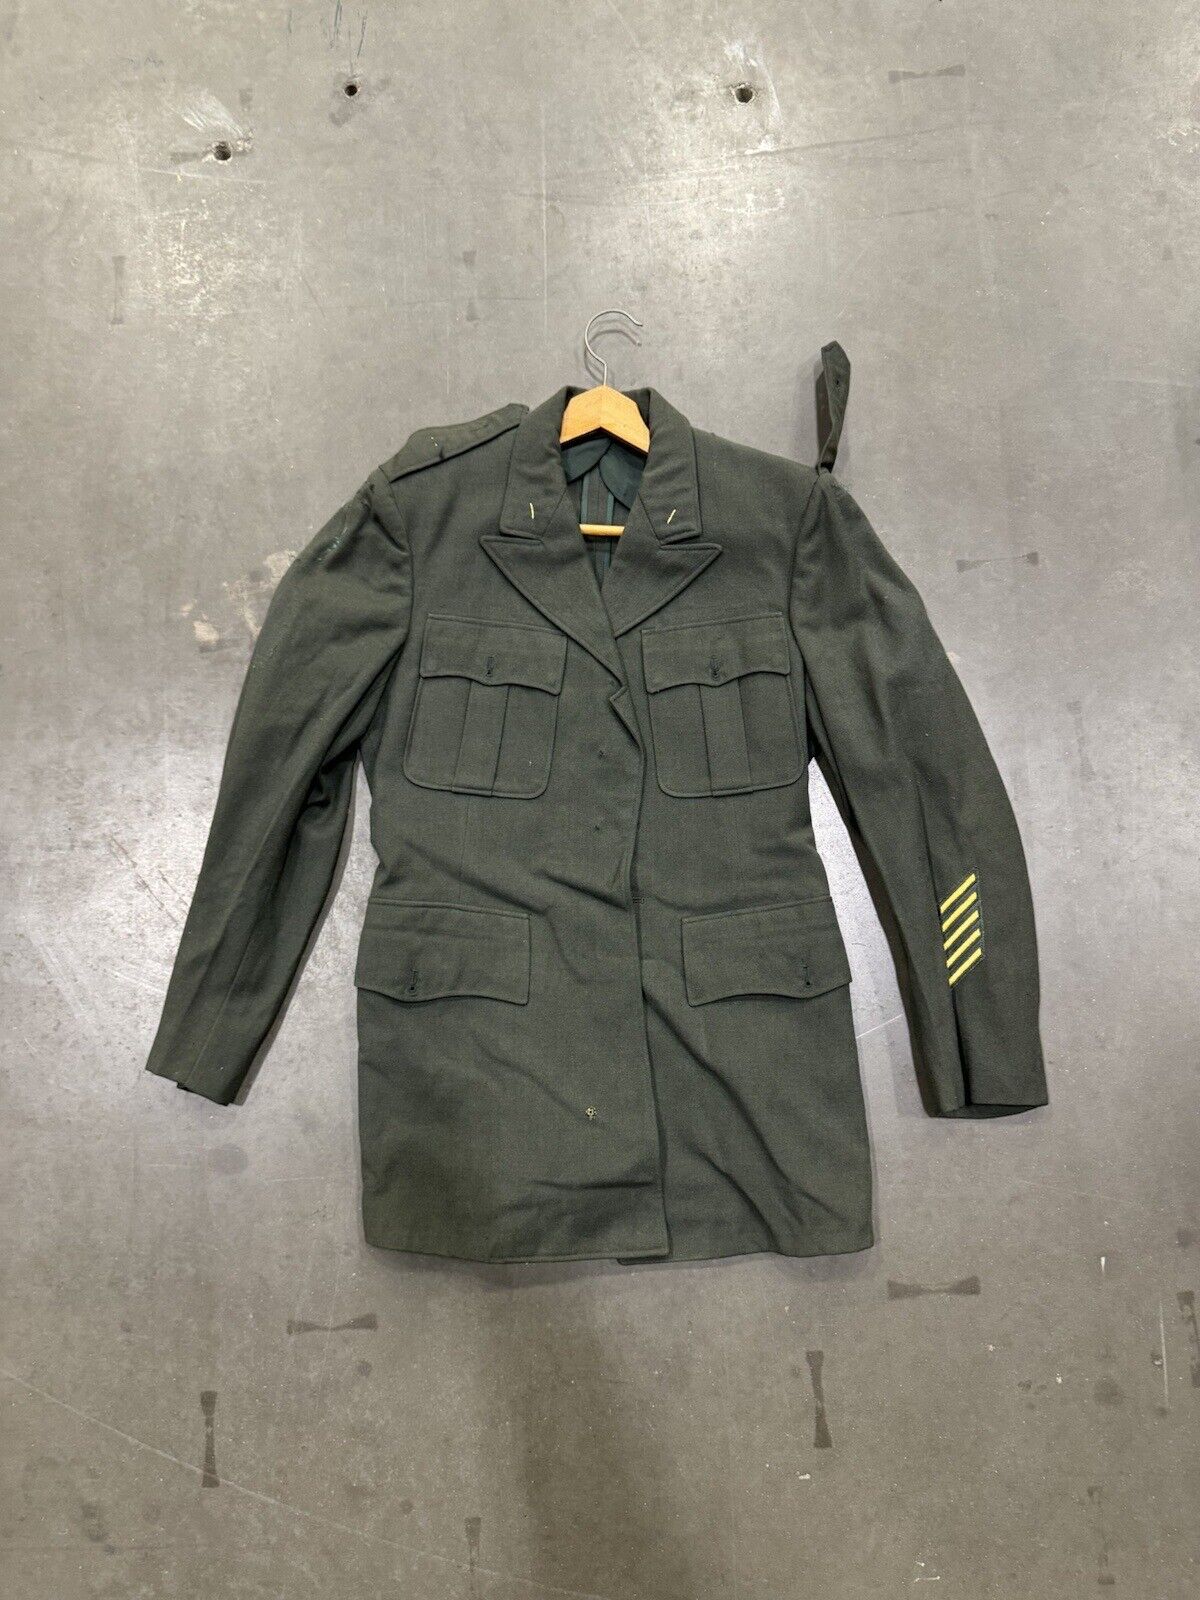 US Army Vintage Class A Dress Uniform Jacket Mens Size 38 R Green Gold Buttons